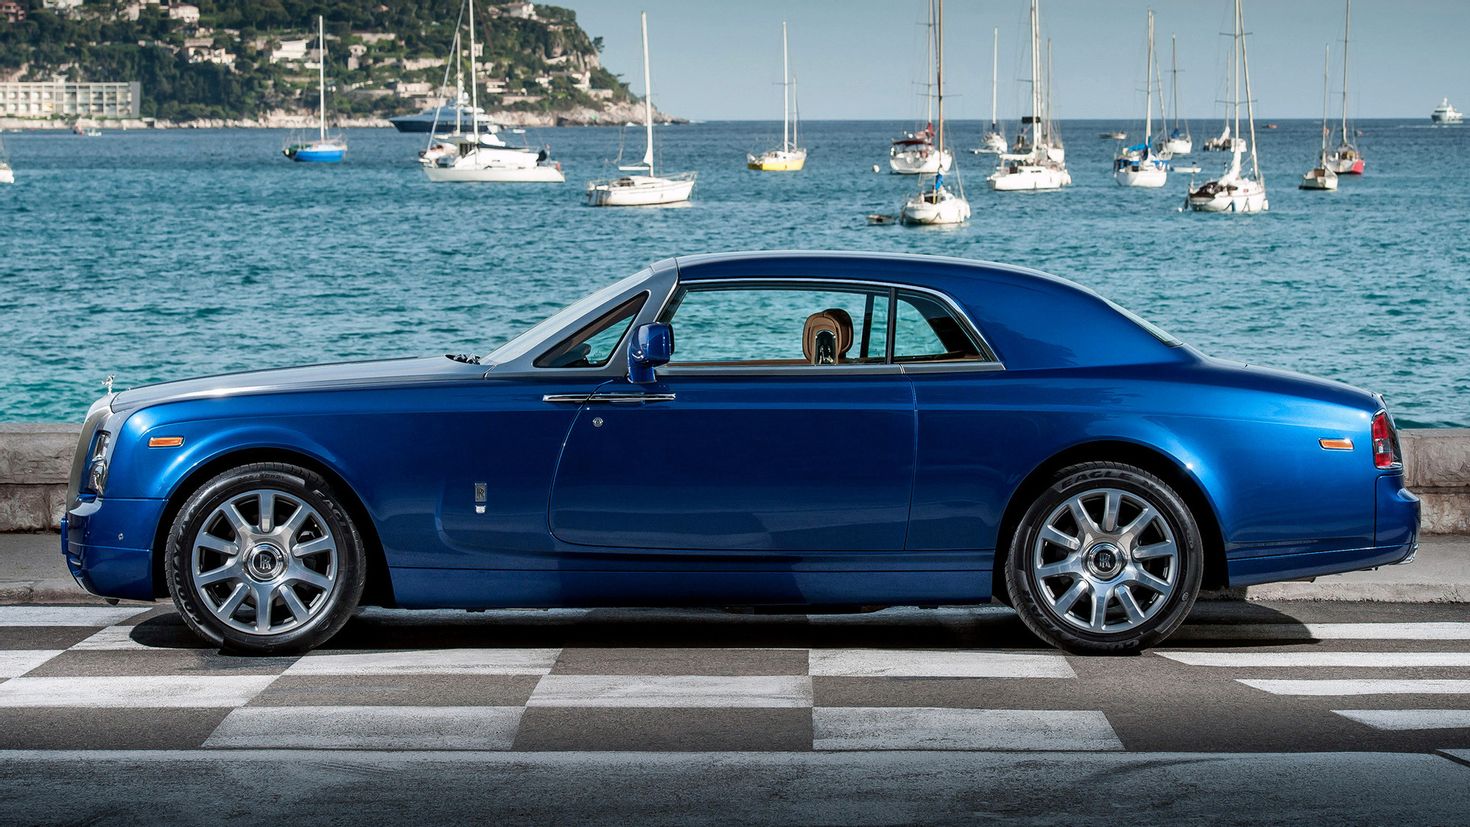 Роллс ройс купе. Rolls Royce Phantom Coupe. Rolls Royce Phantom купе. Rolls Royce Phantom VII купе. Rolls-Royce Phantom Coupe 7.